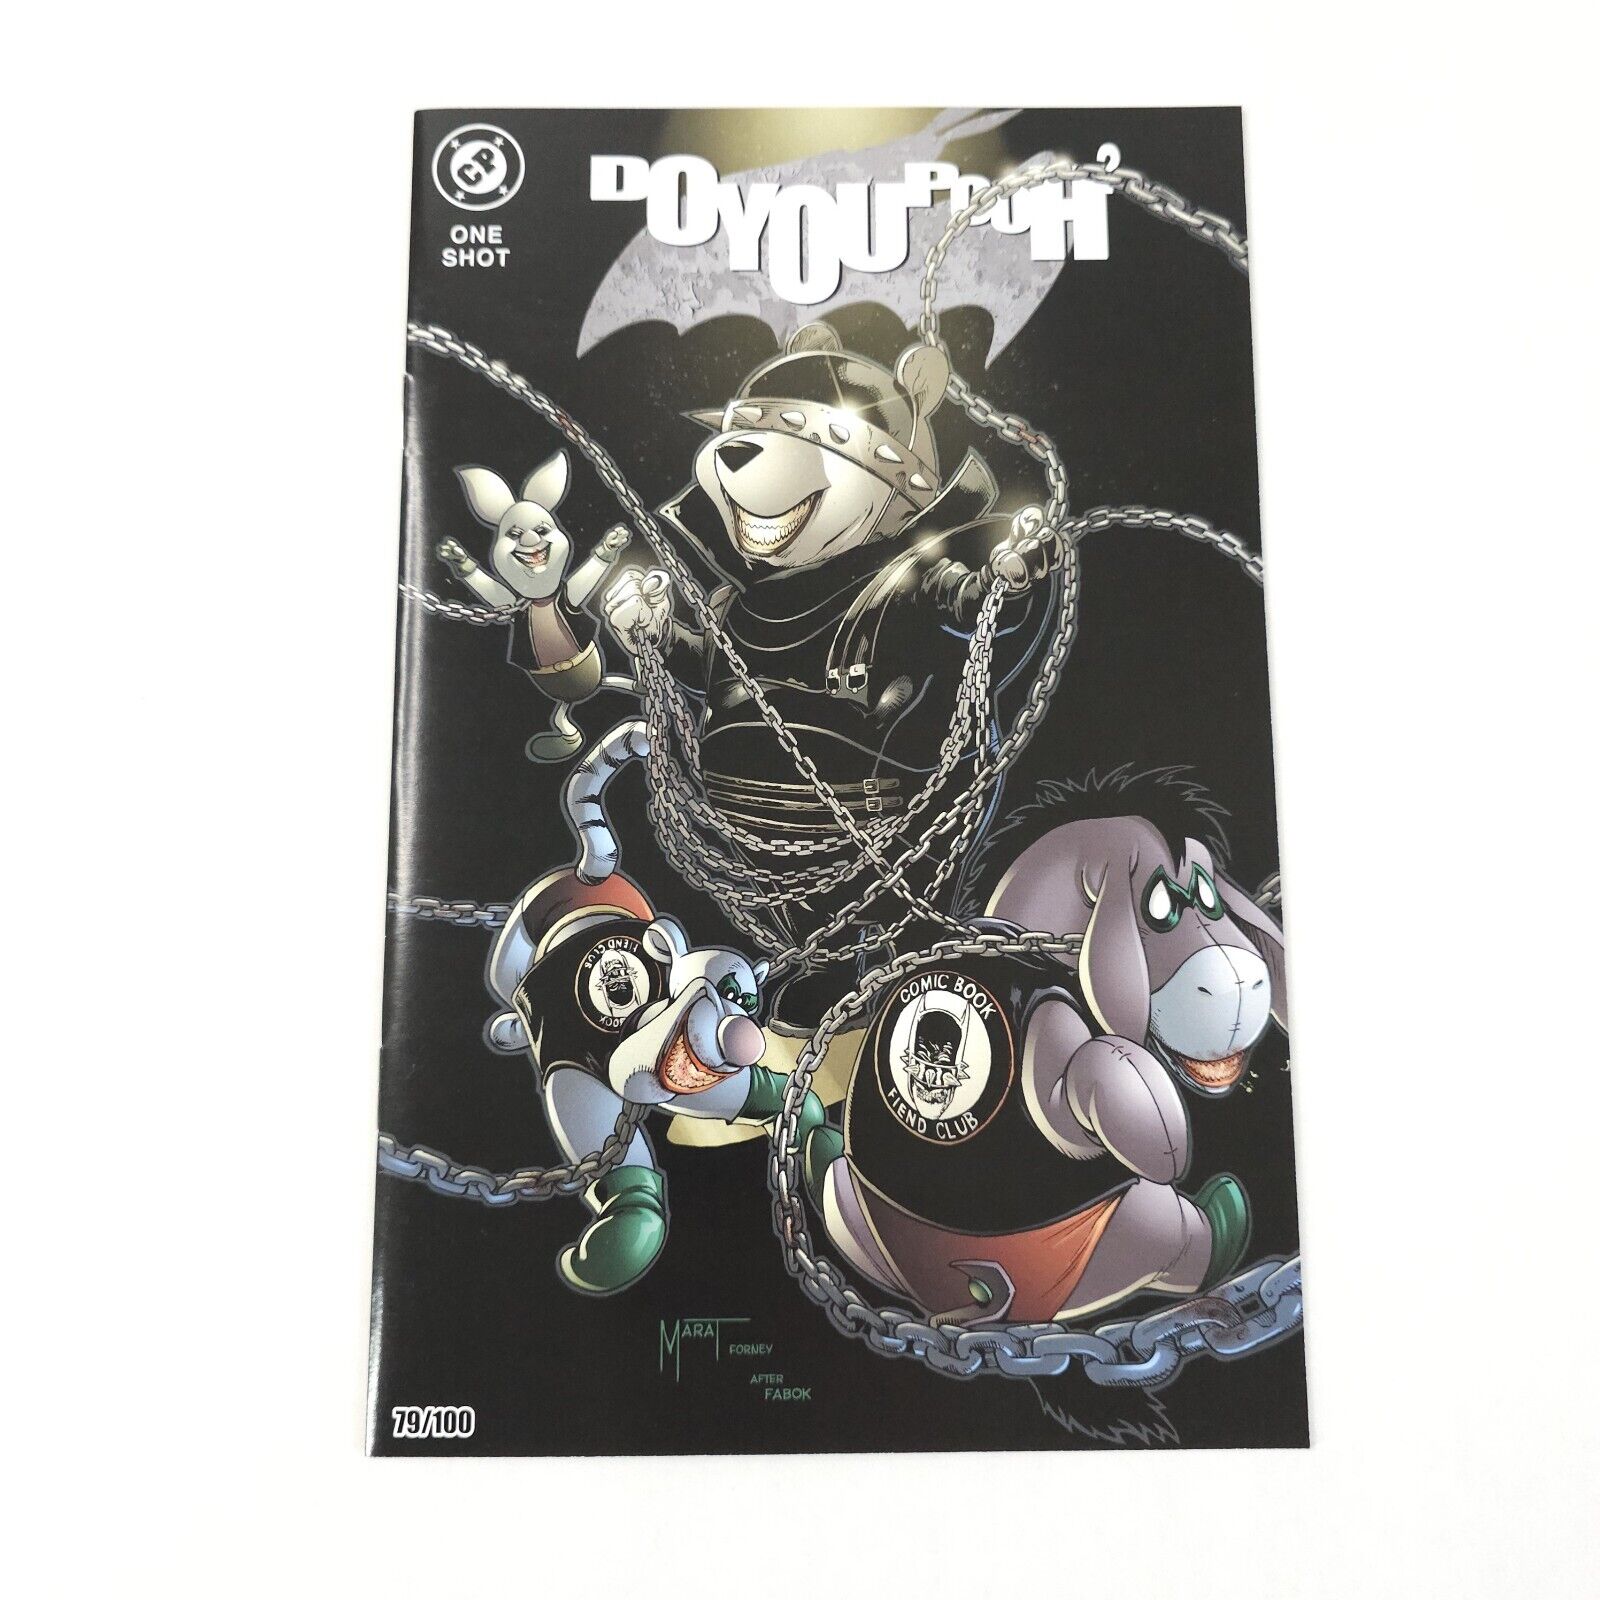 Do You Pooh Comic Book Fiend Club Batman Who Laughs Swipe Cover NM+ 9.6 Rare